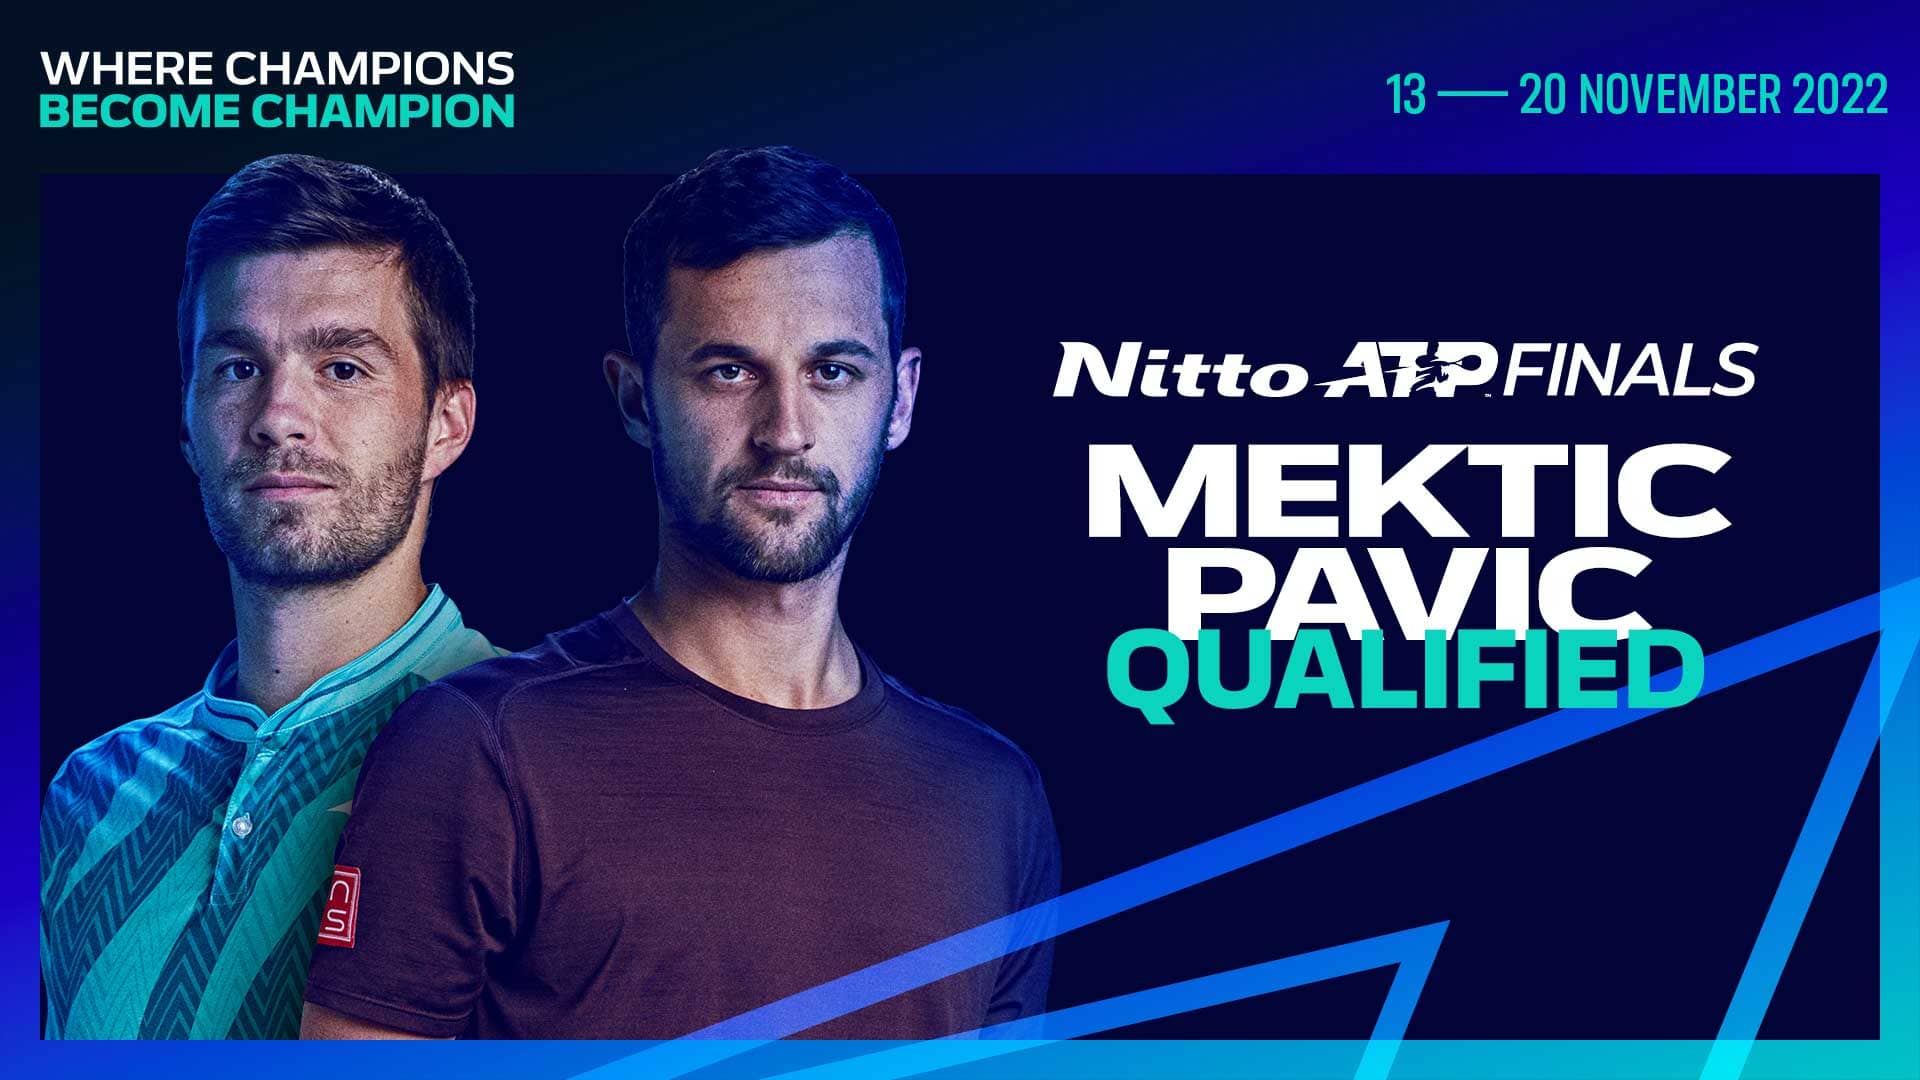 Koolhof/Skupski Claim Year-End No. 1 Pepperstone ATP Doubles Team